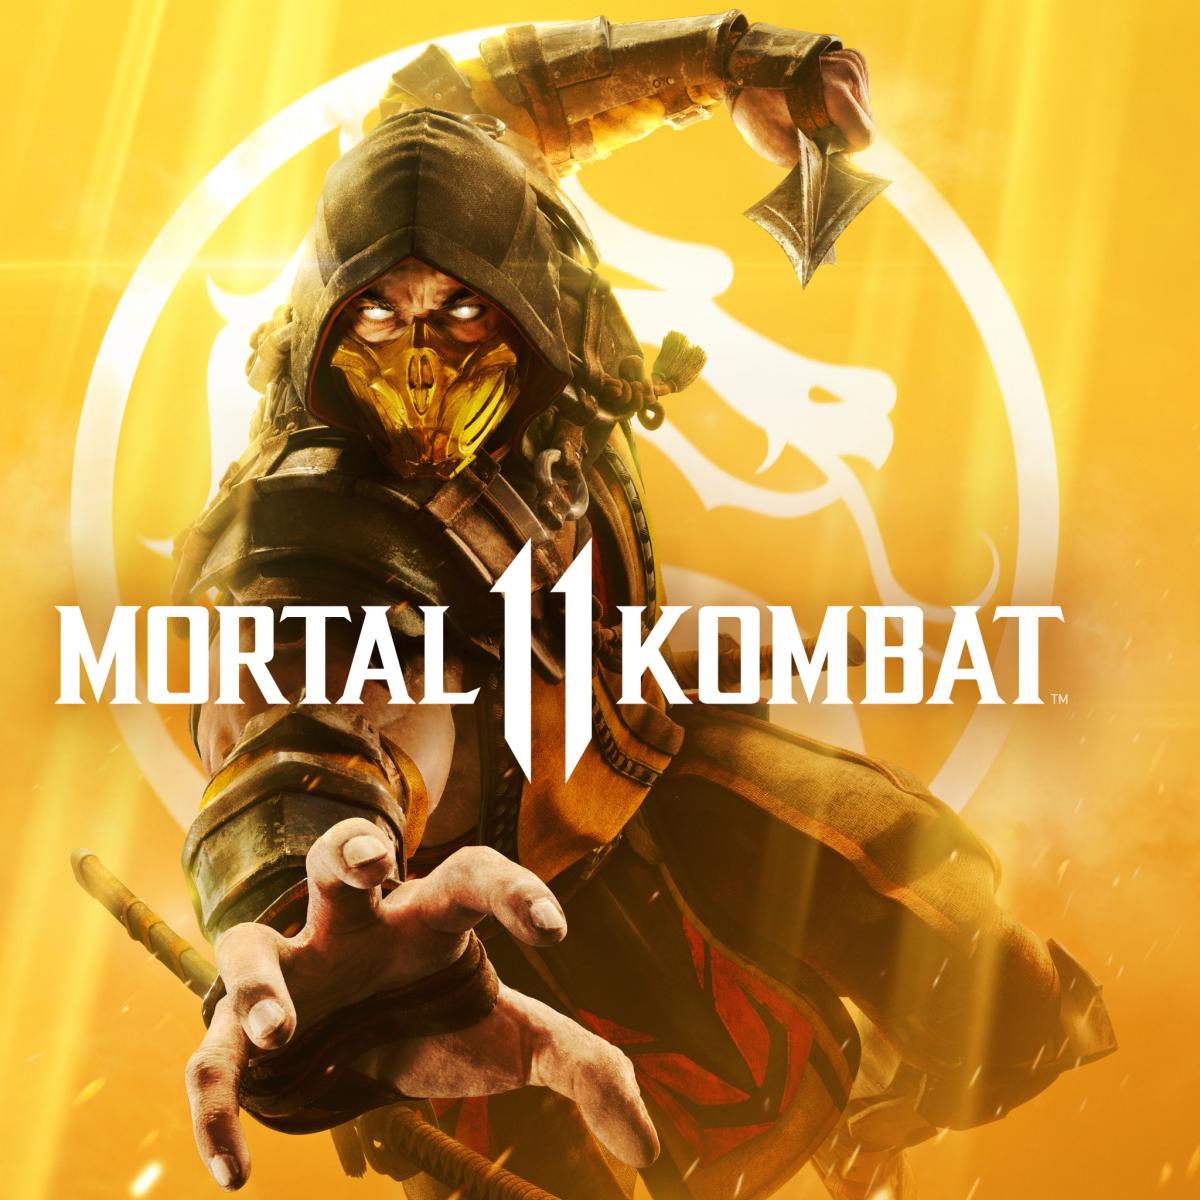 Análise: Mortal Kombat XL (Multi) é a versão definitiva dos